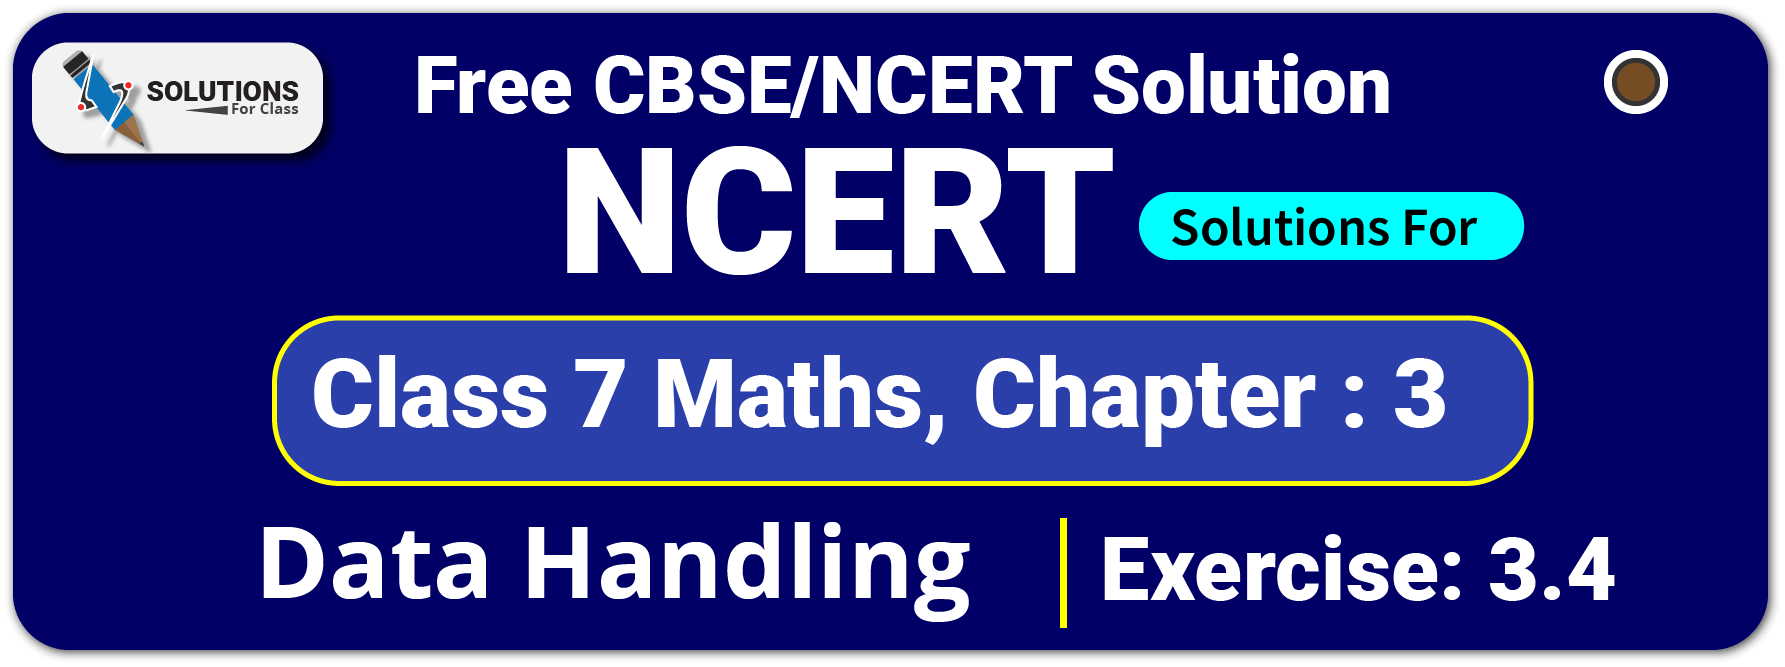 NCERT Solutions For Class 7 Maths Chapter 3, Data Handling, Exercise 3.4